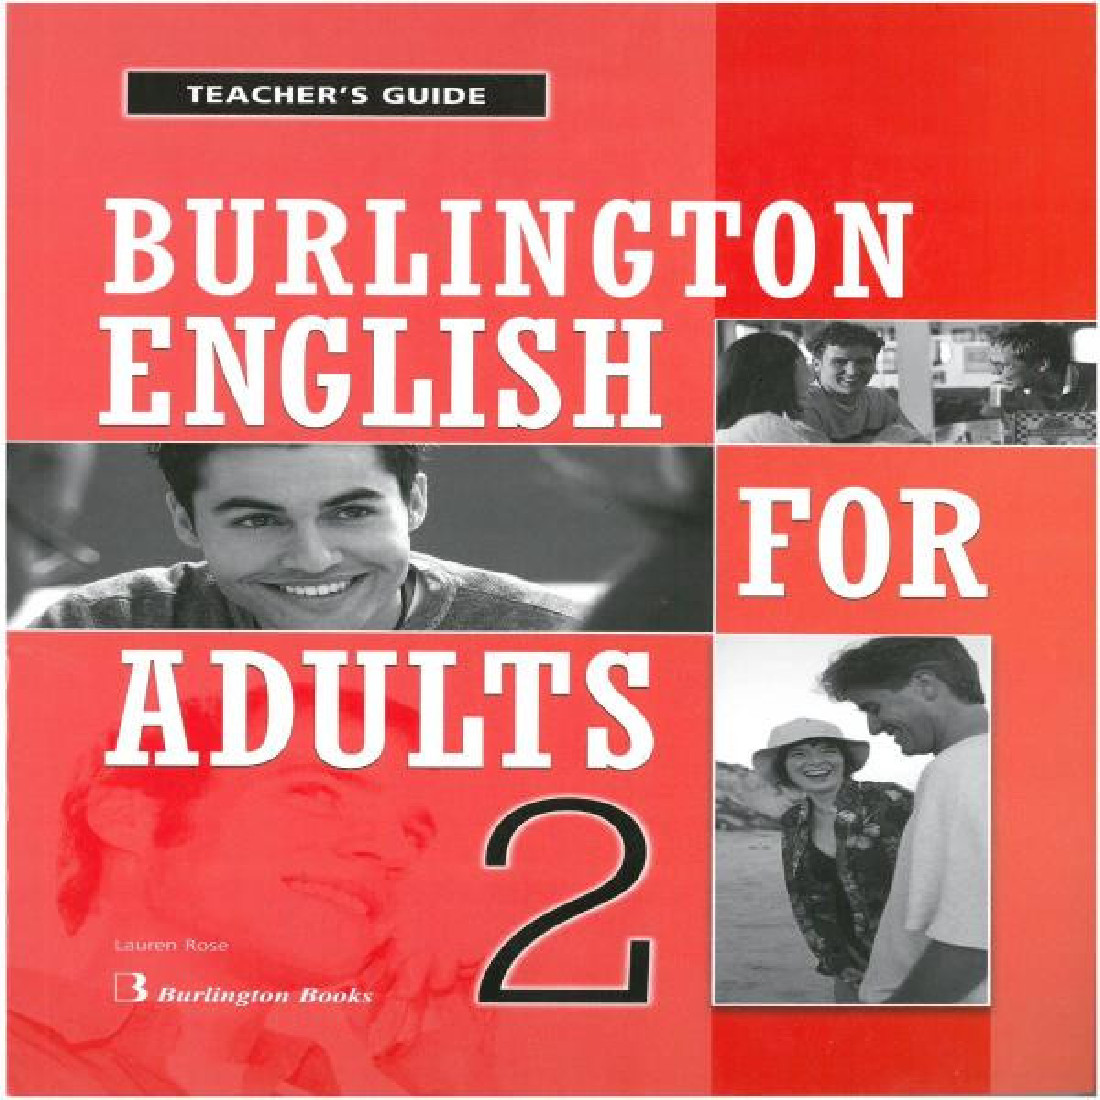 BURLINGTON ENGLISH FOR ADULTS 2 TEACHERS GUIDE